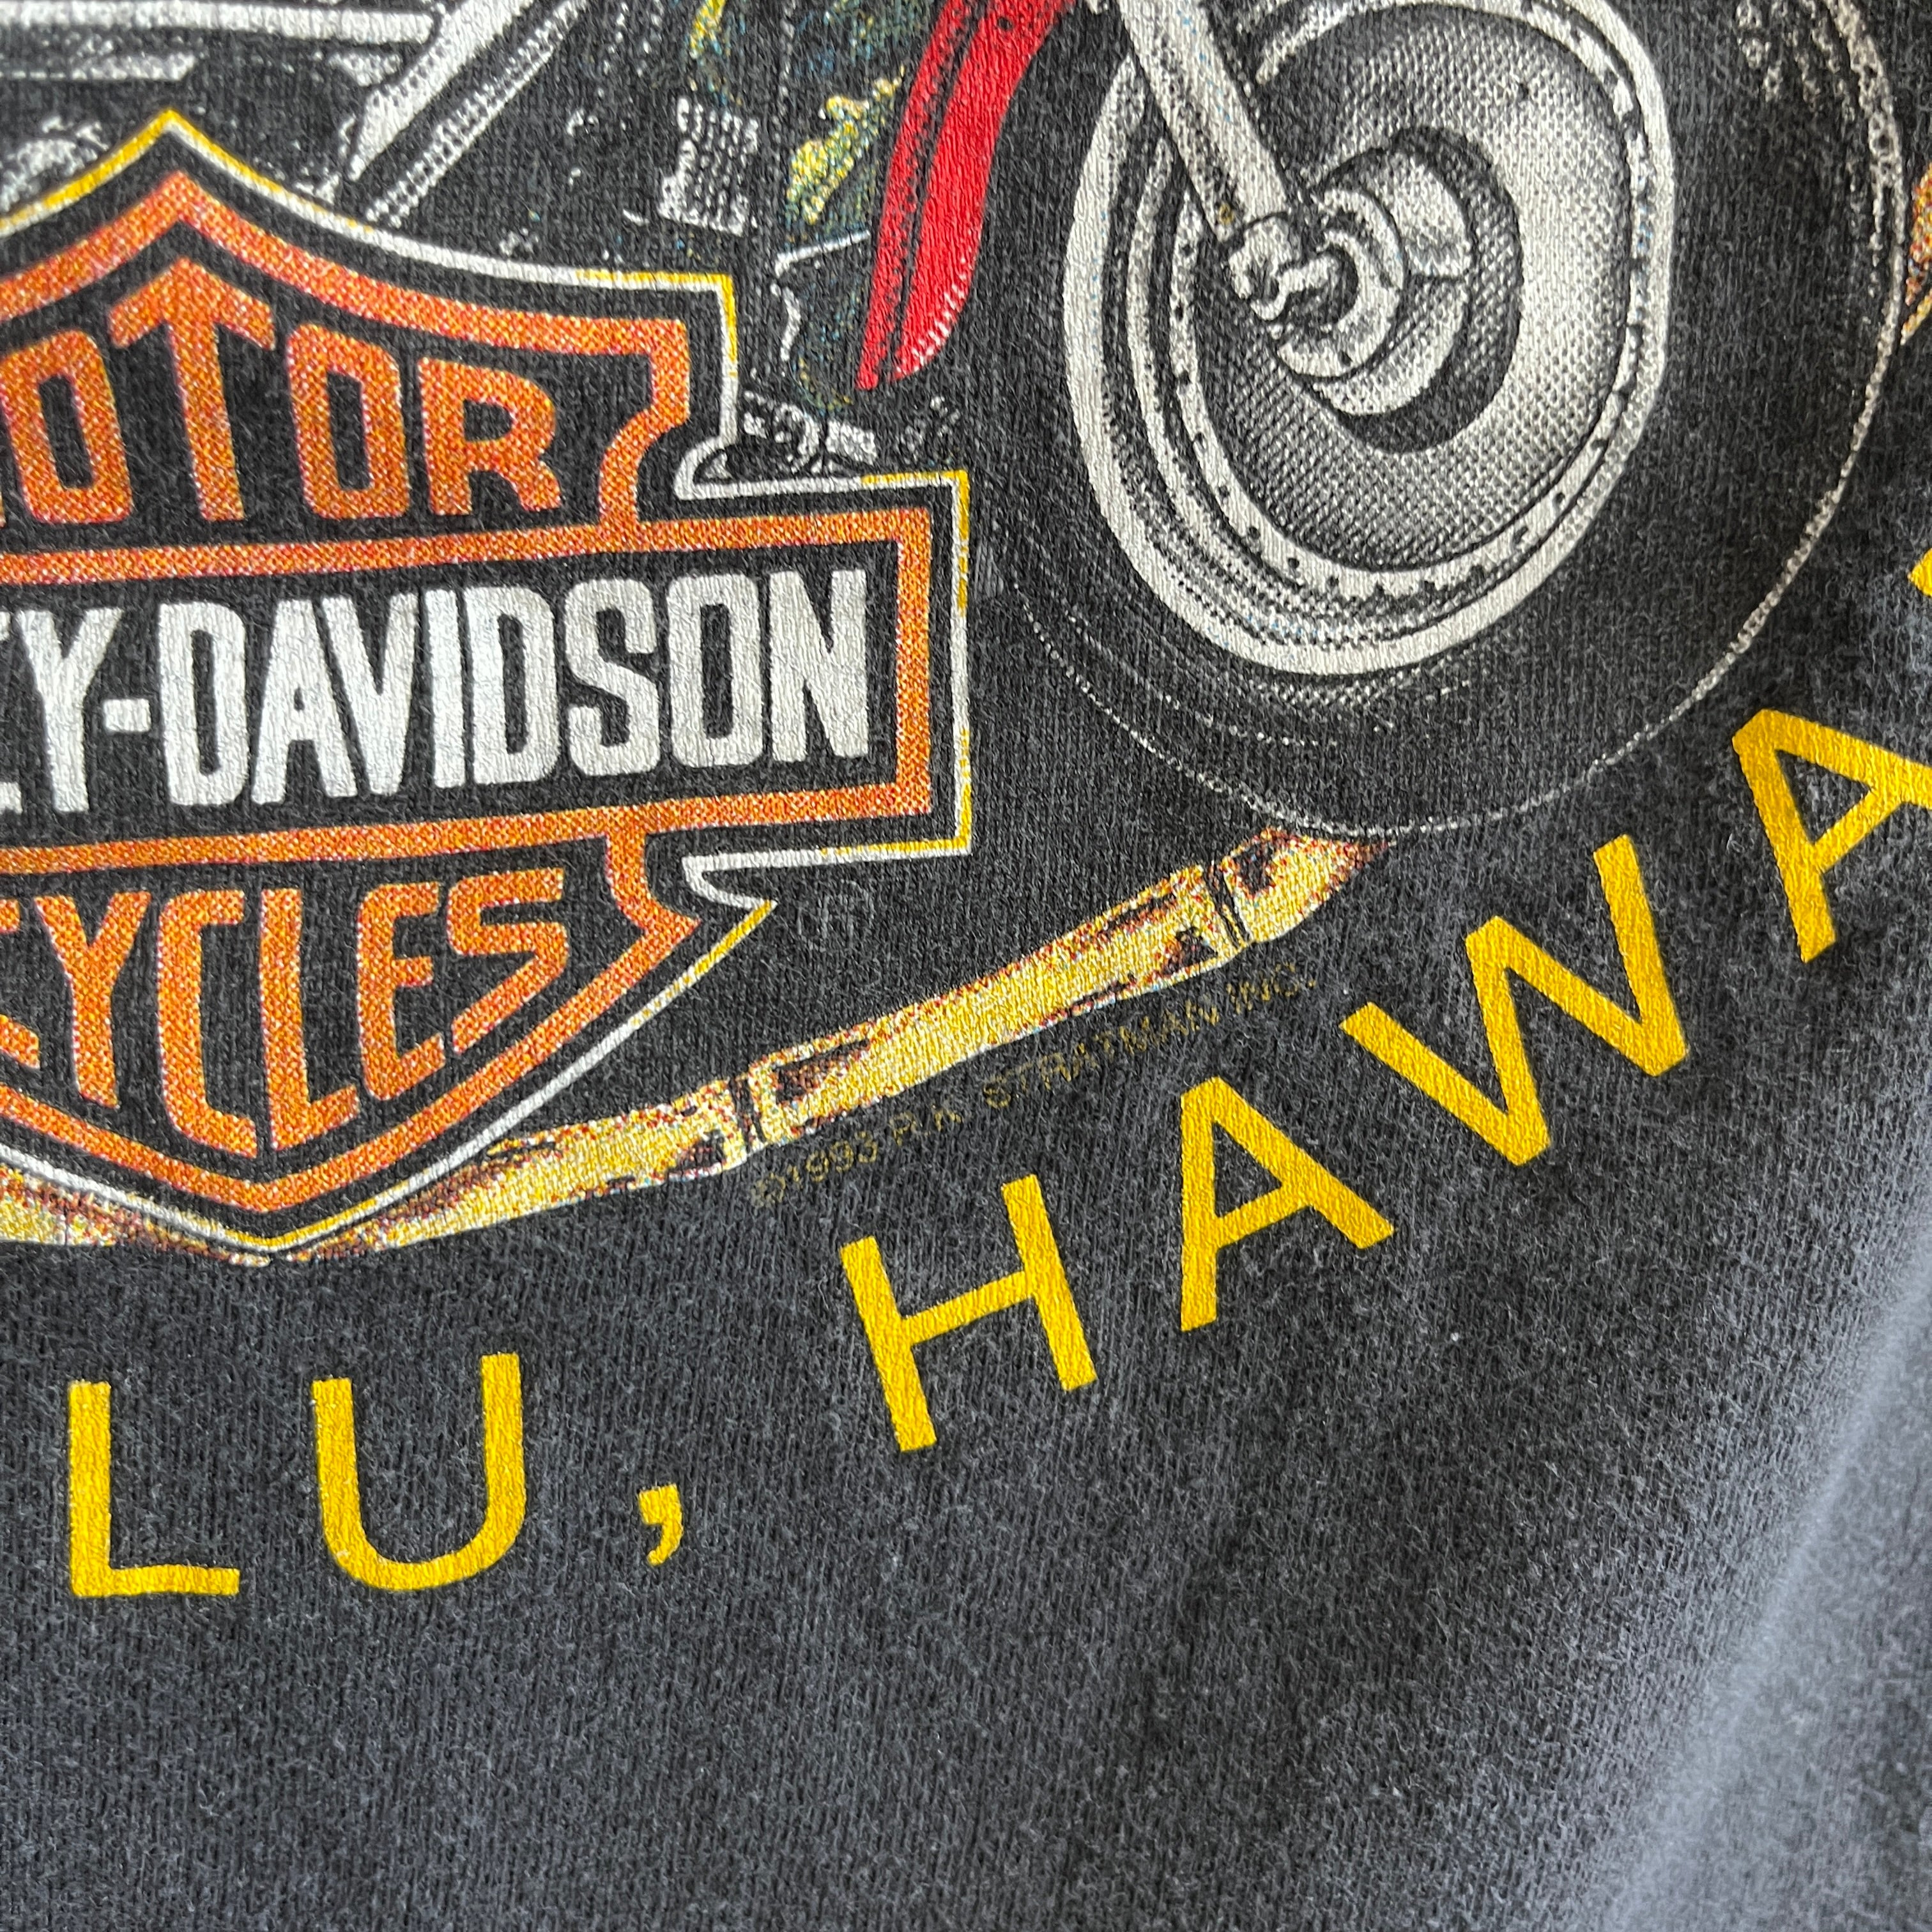 1993 Hawaii Harley Front and Back T-Shirt - Calling Collectors!